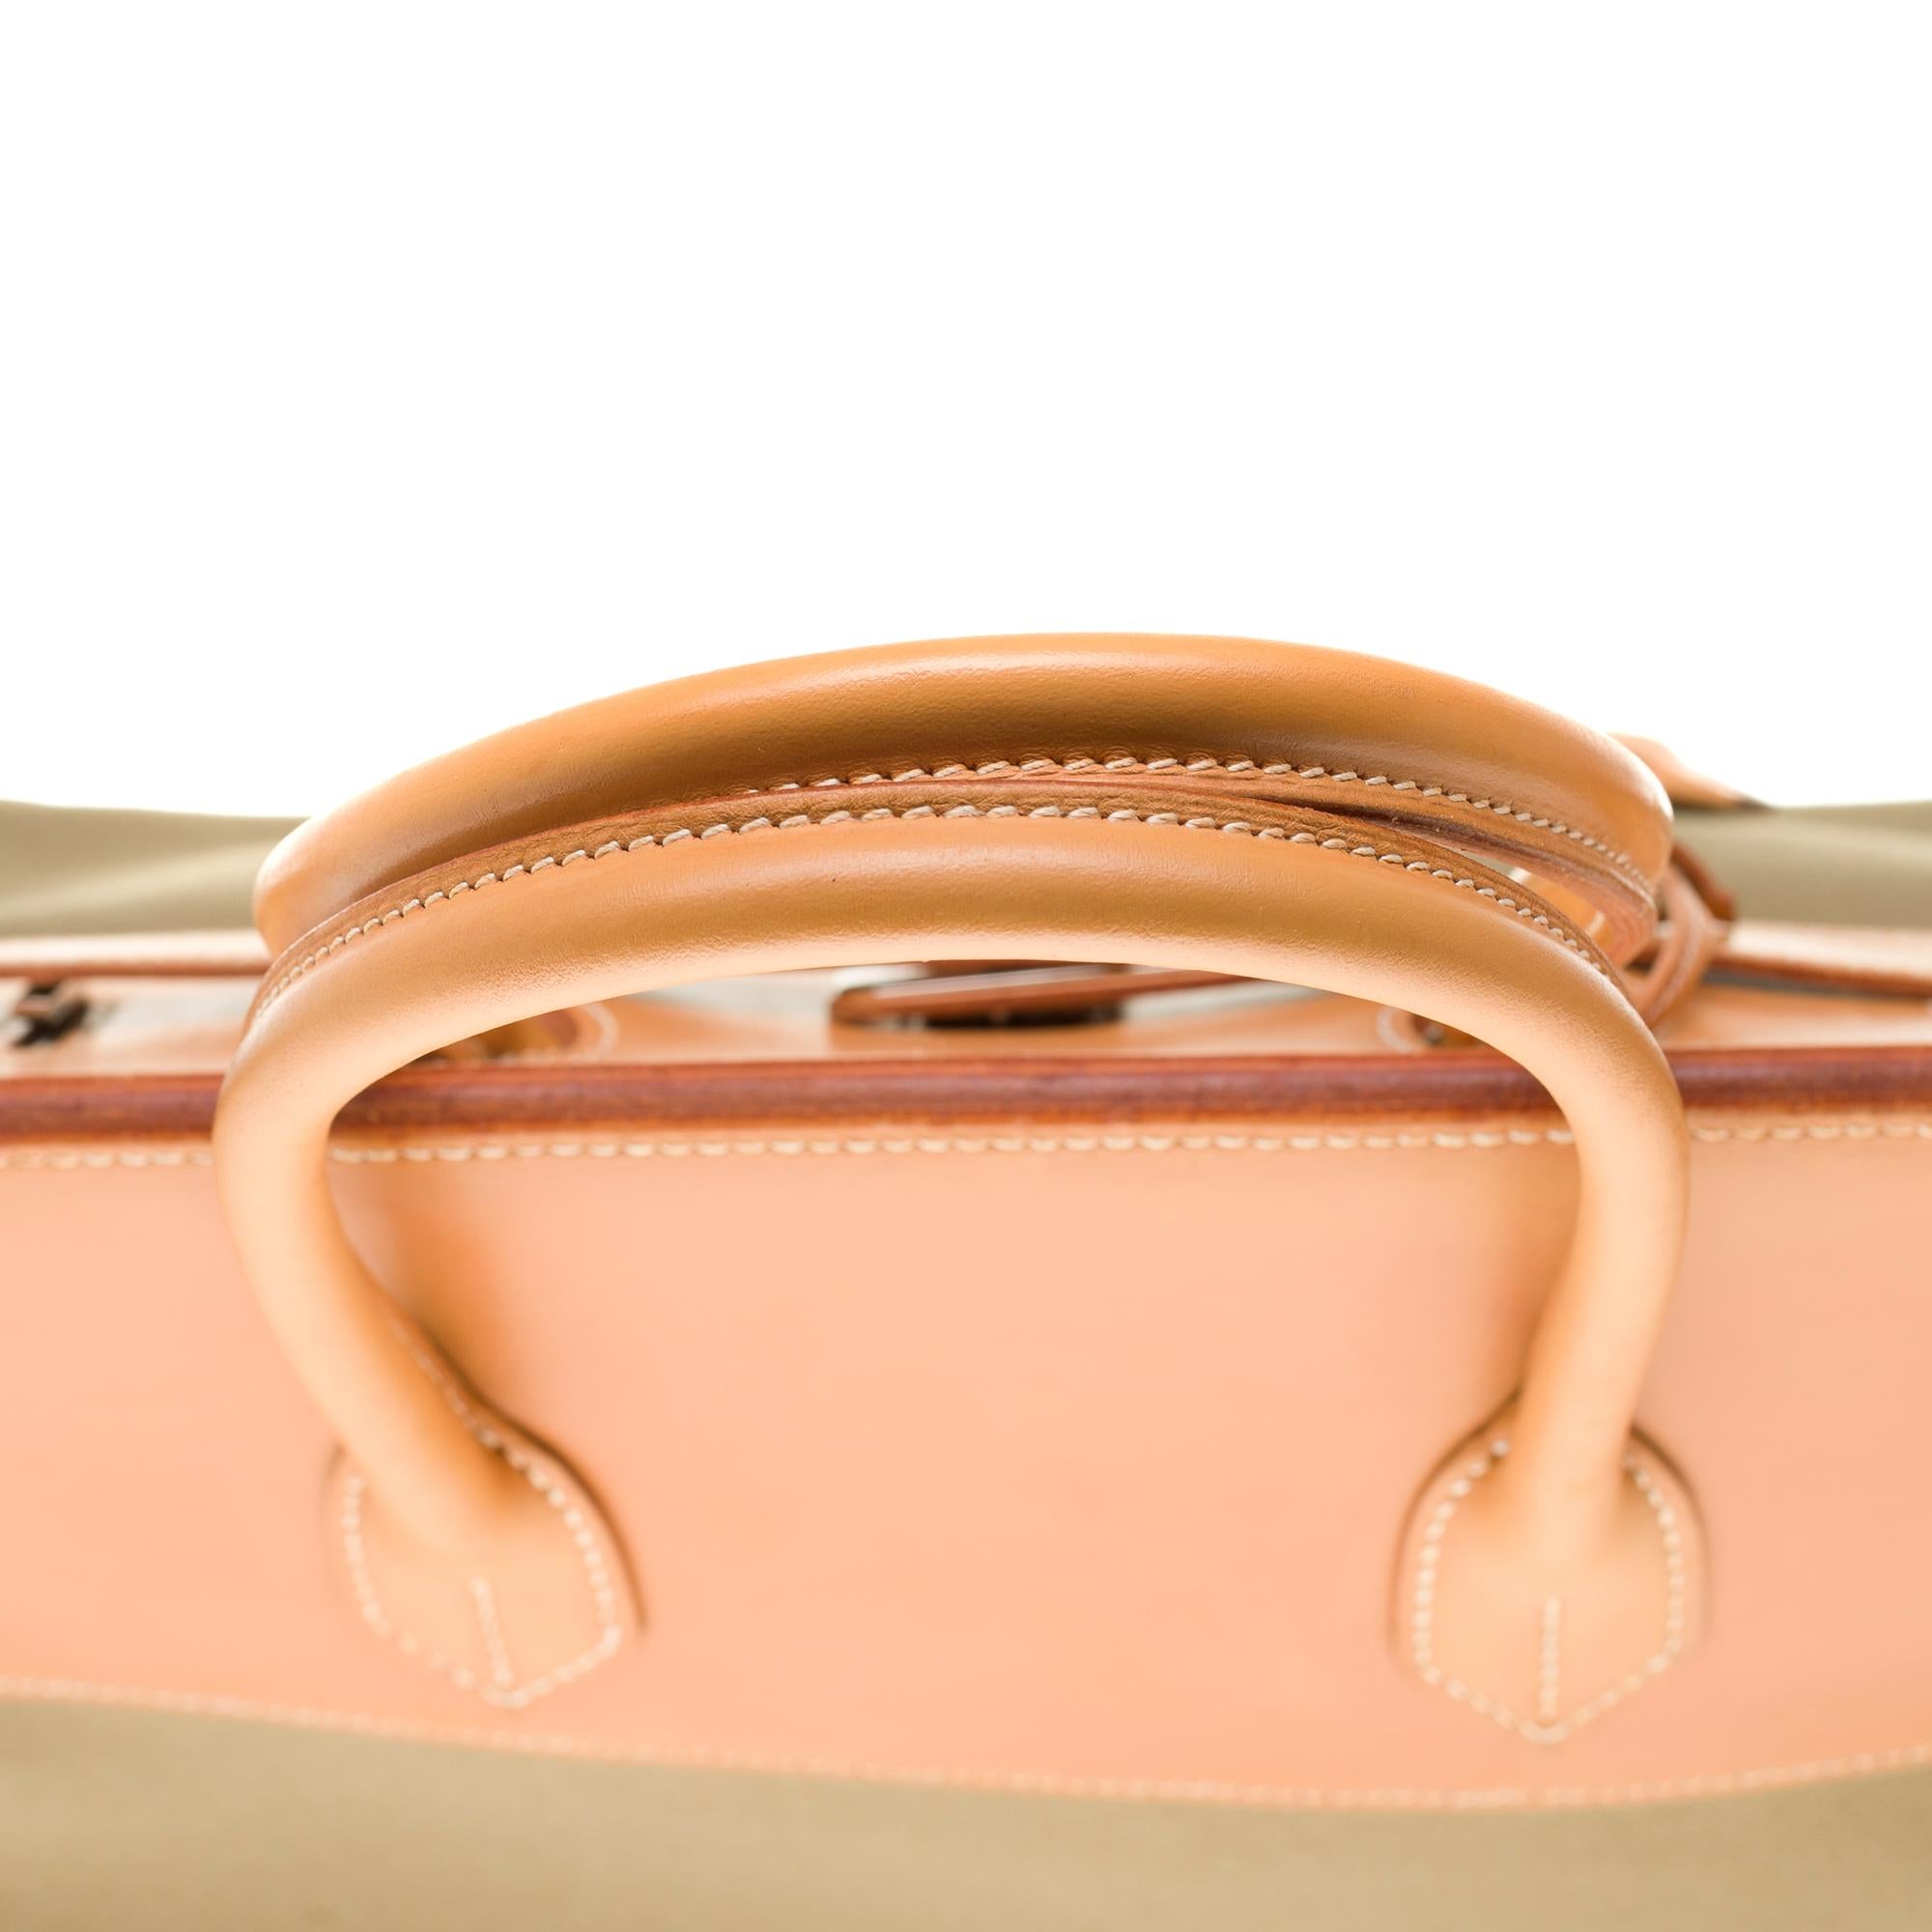 Rare Hermès Birkin 35 bi-material handbag in  khaki canvas and natural leather 1